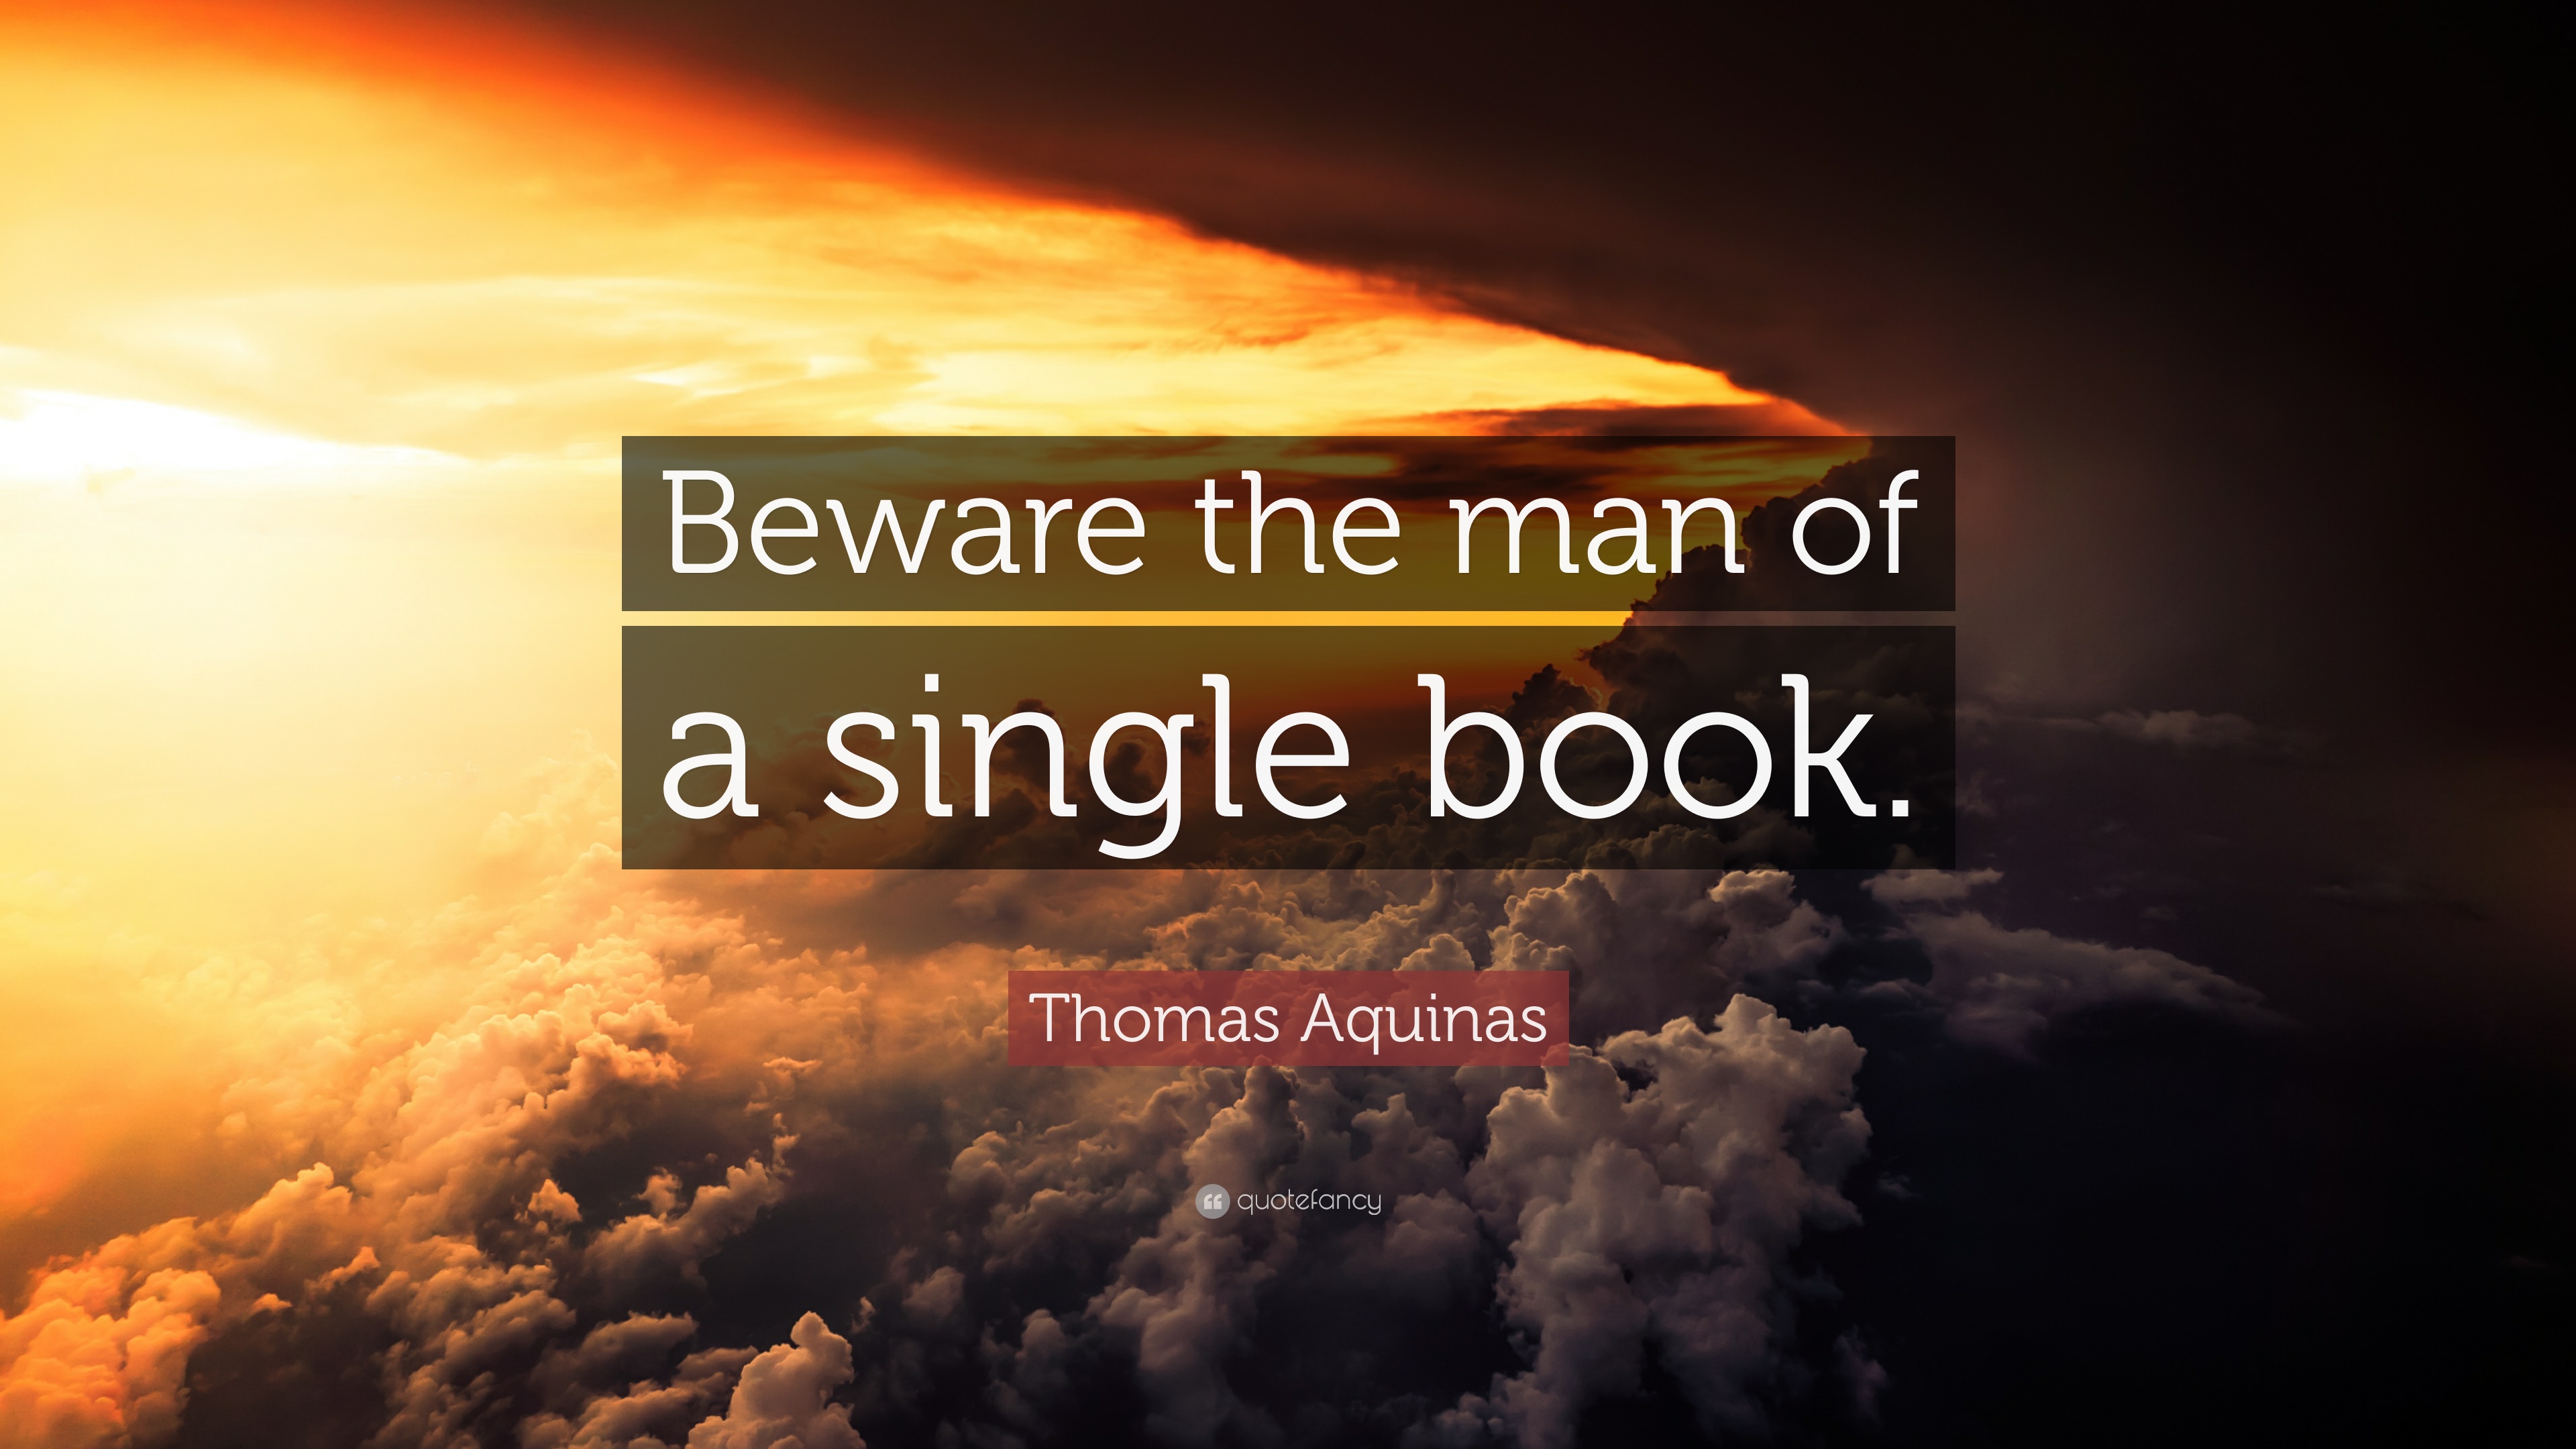 Thomas Aquinas Quote: “Beware the man of a single book.” 12